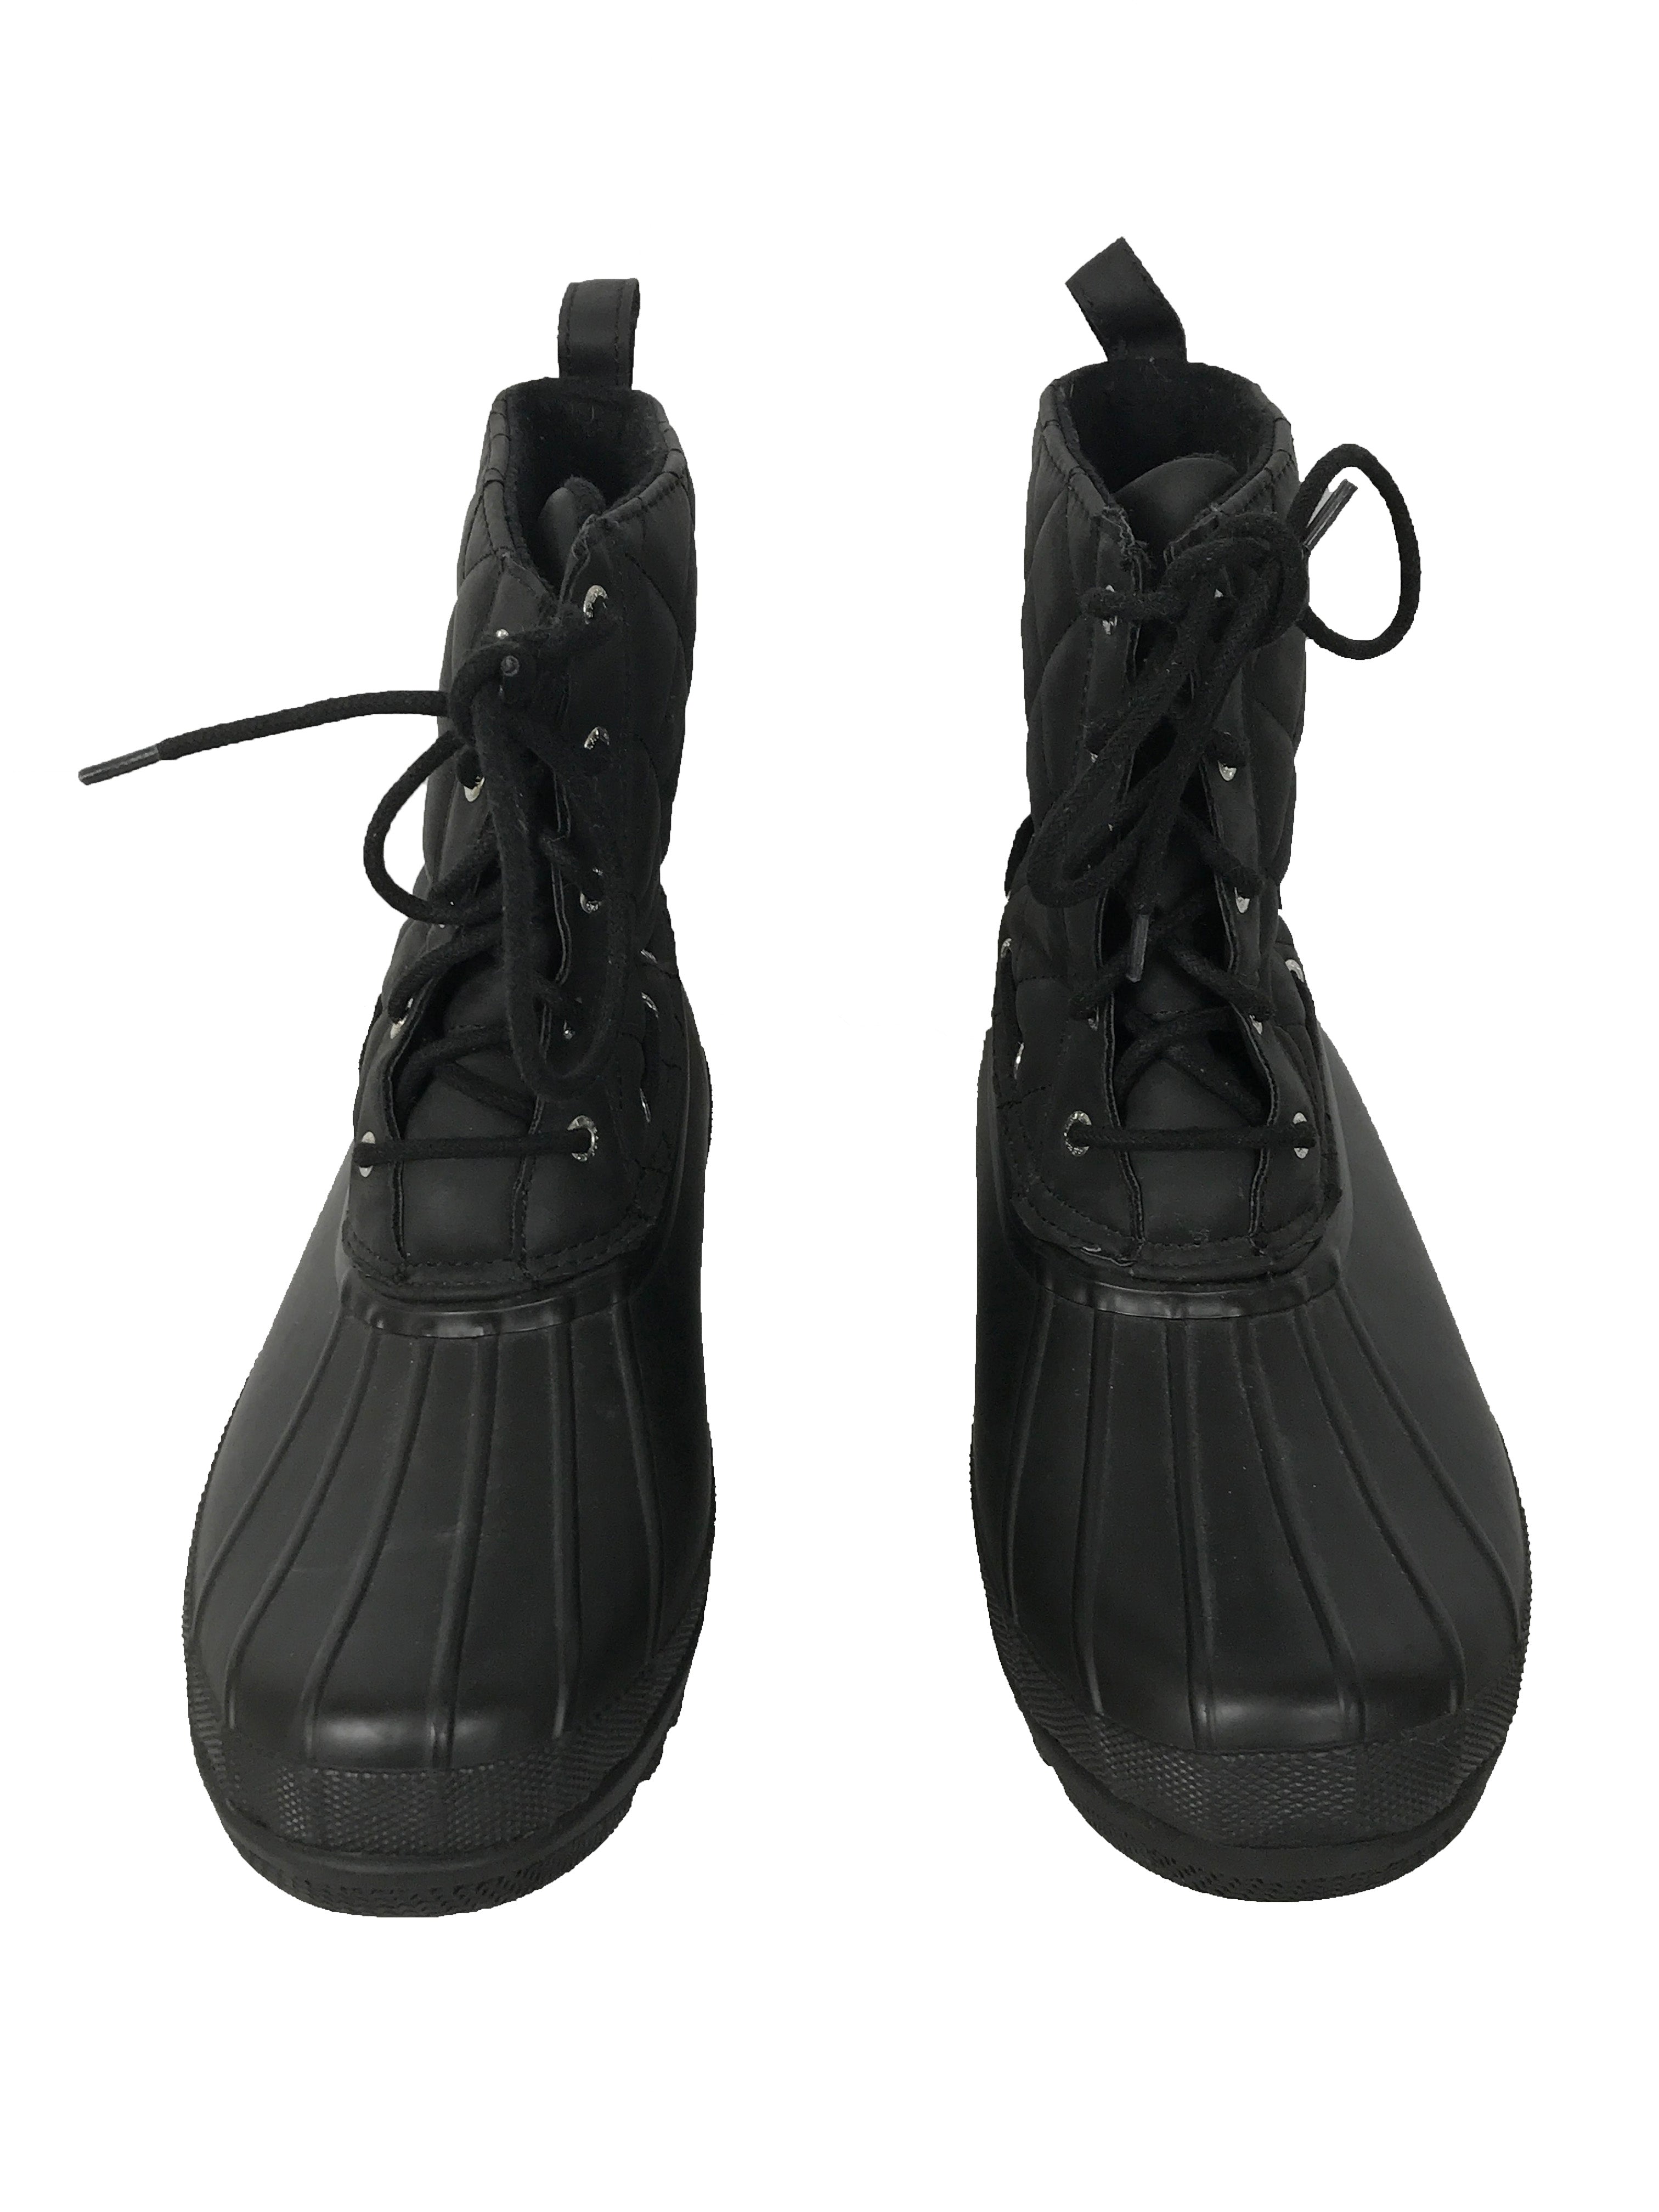 Sperry Black Duck Boots Women's Size 10